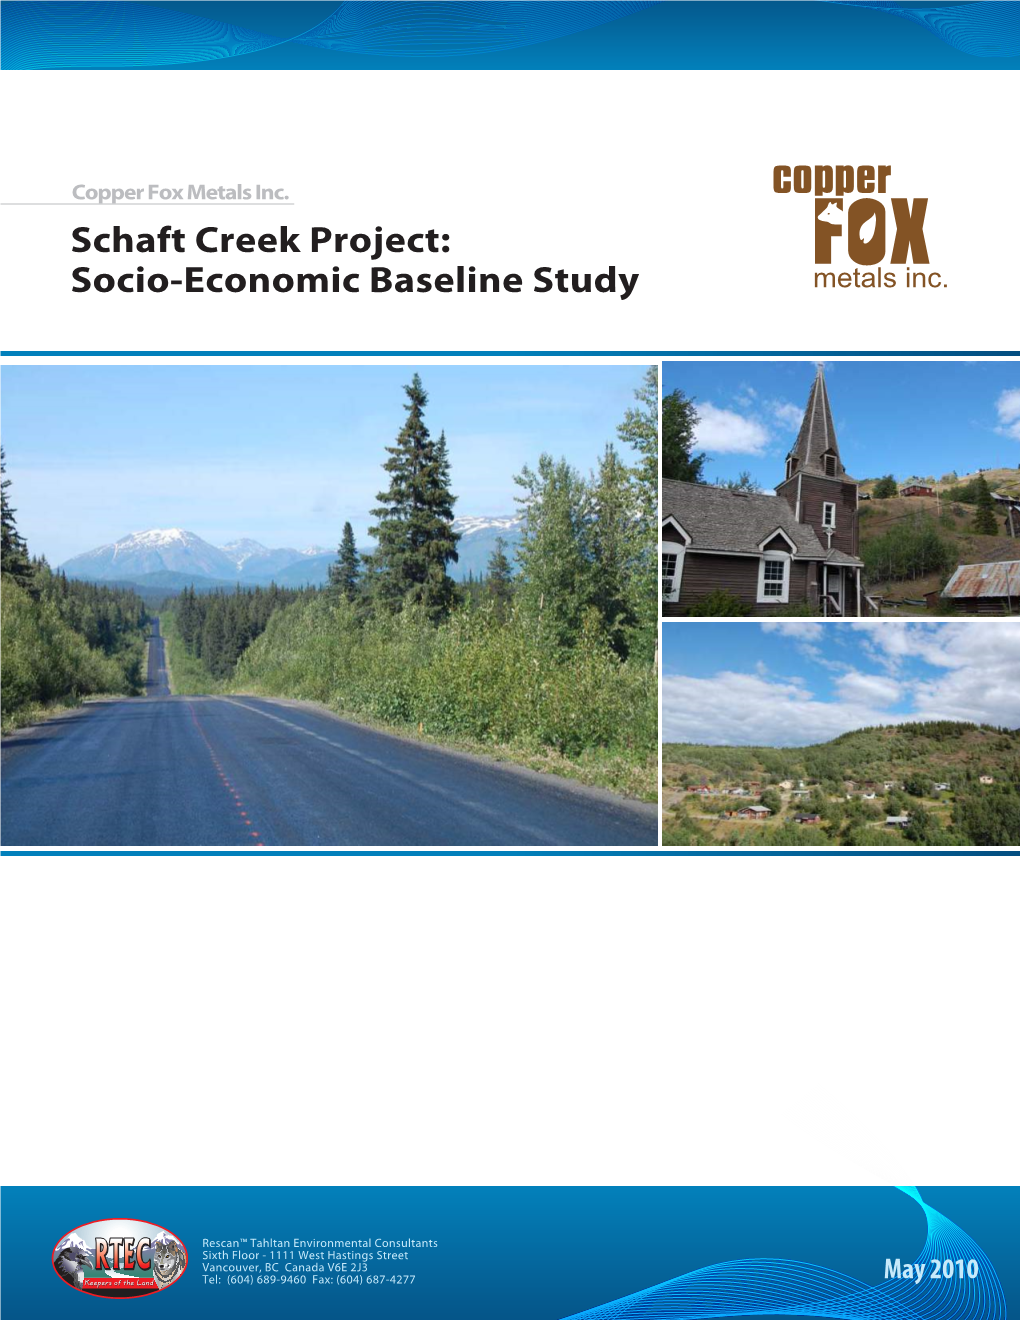 Schaft Creek Socio-Economic Baseline